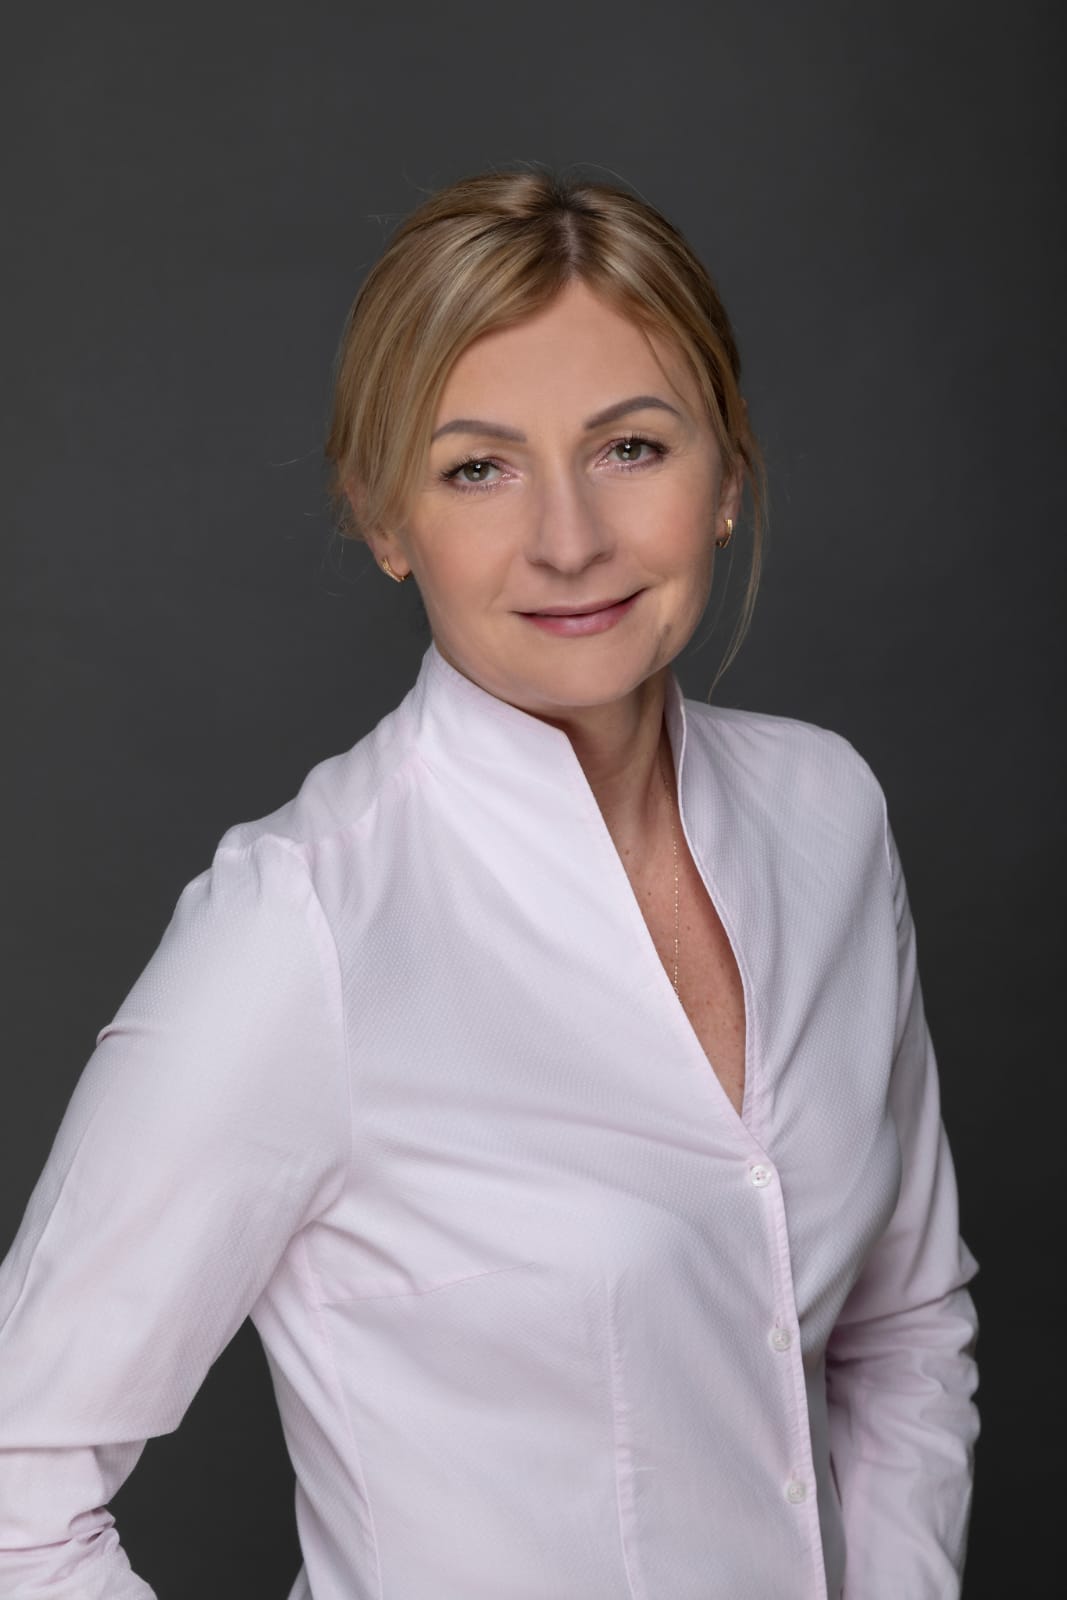 Dyrektor Beata Świderska